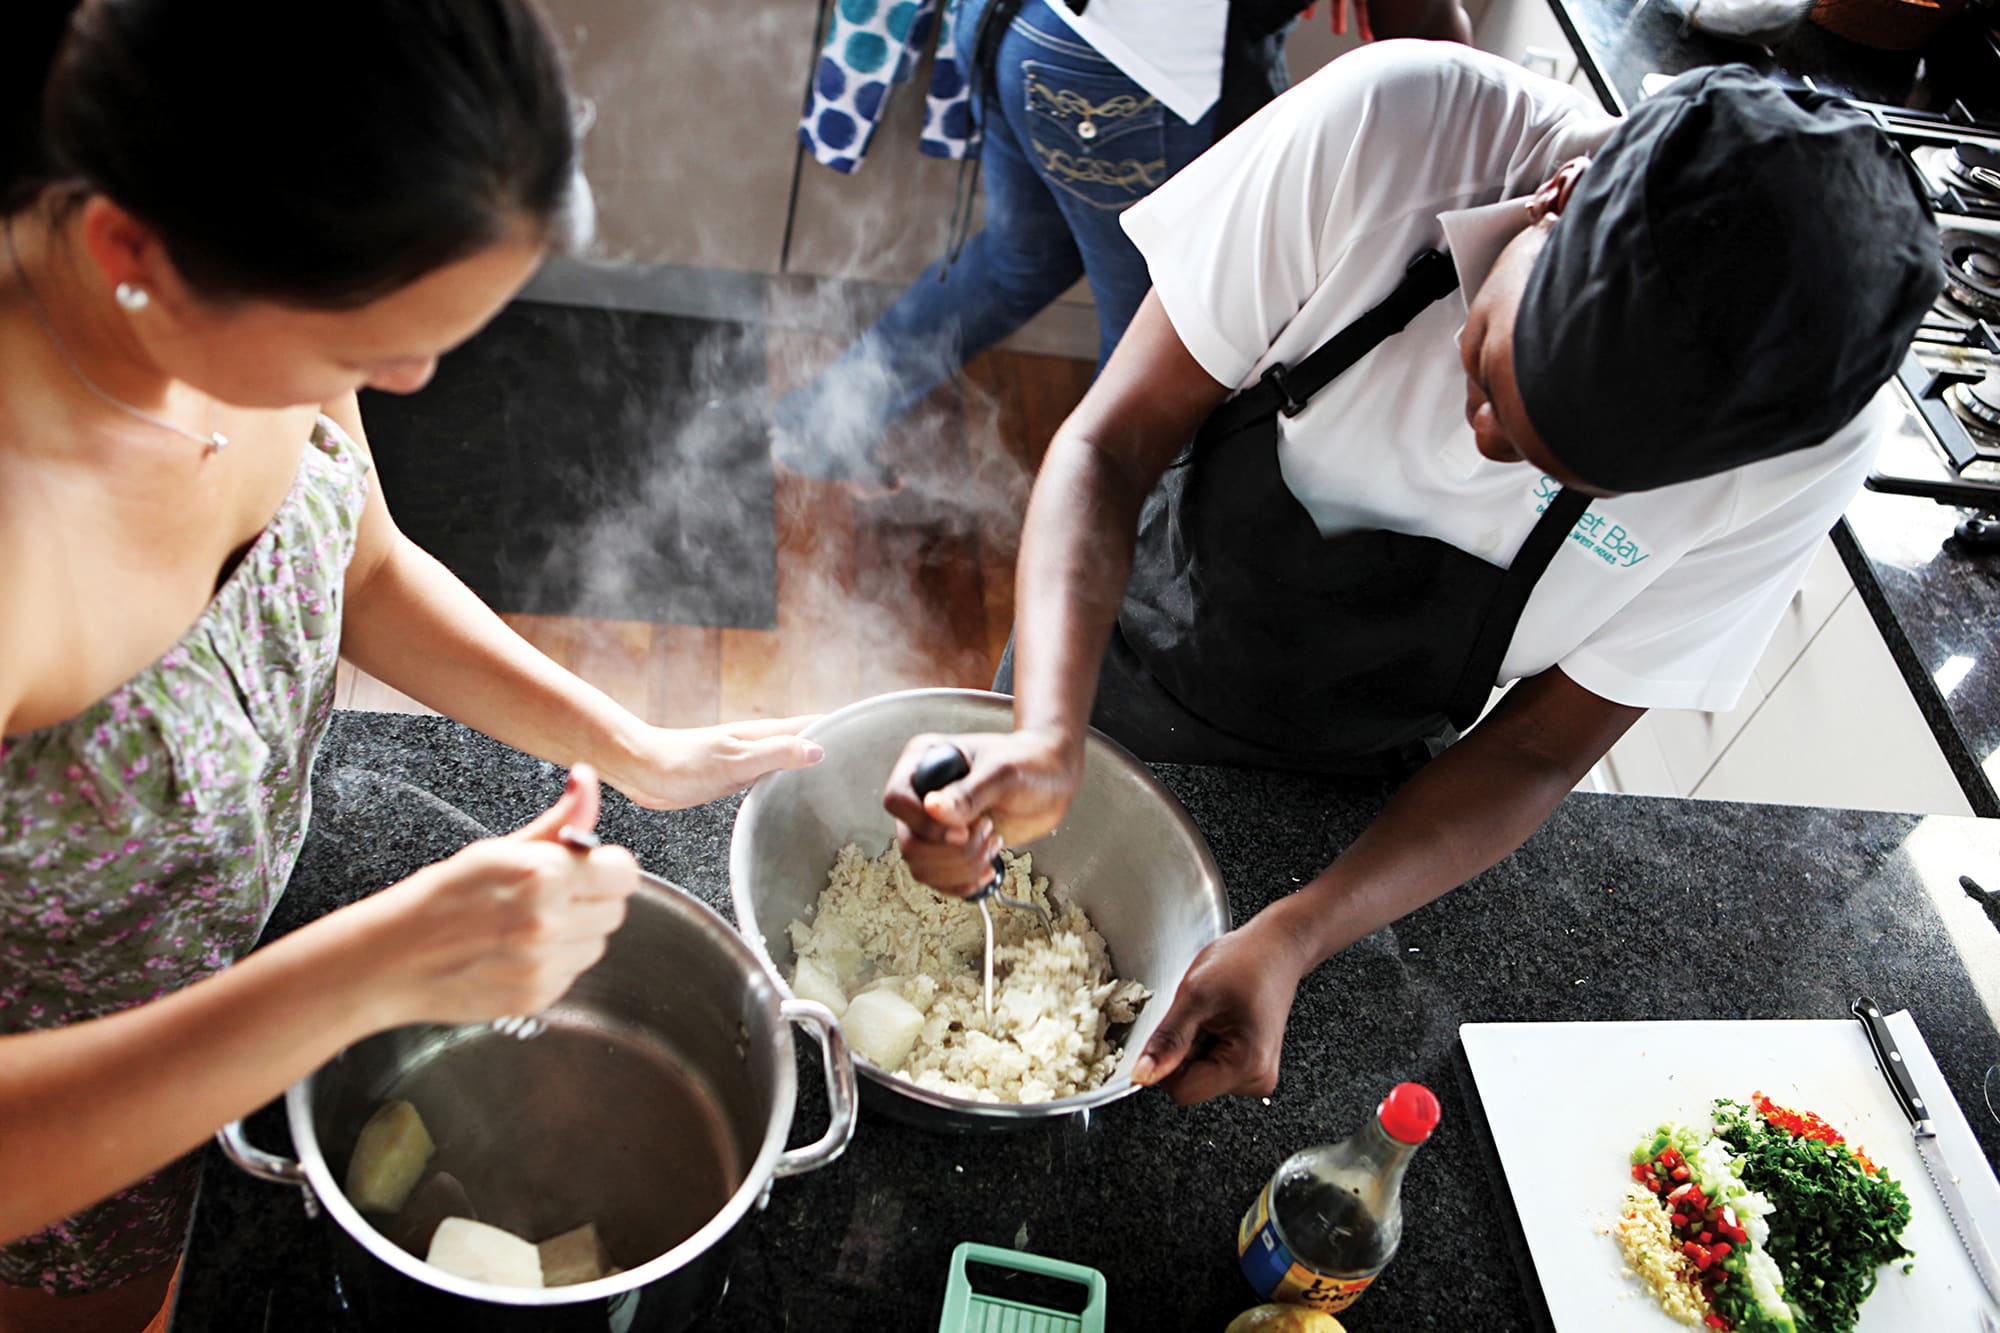 Cooking Classes to Make Caribbean Food: Secret Bay